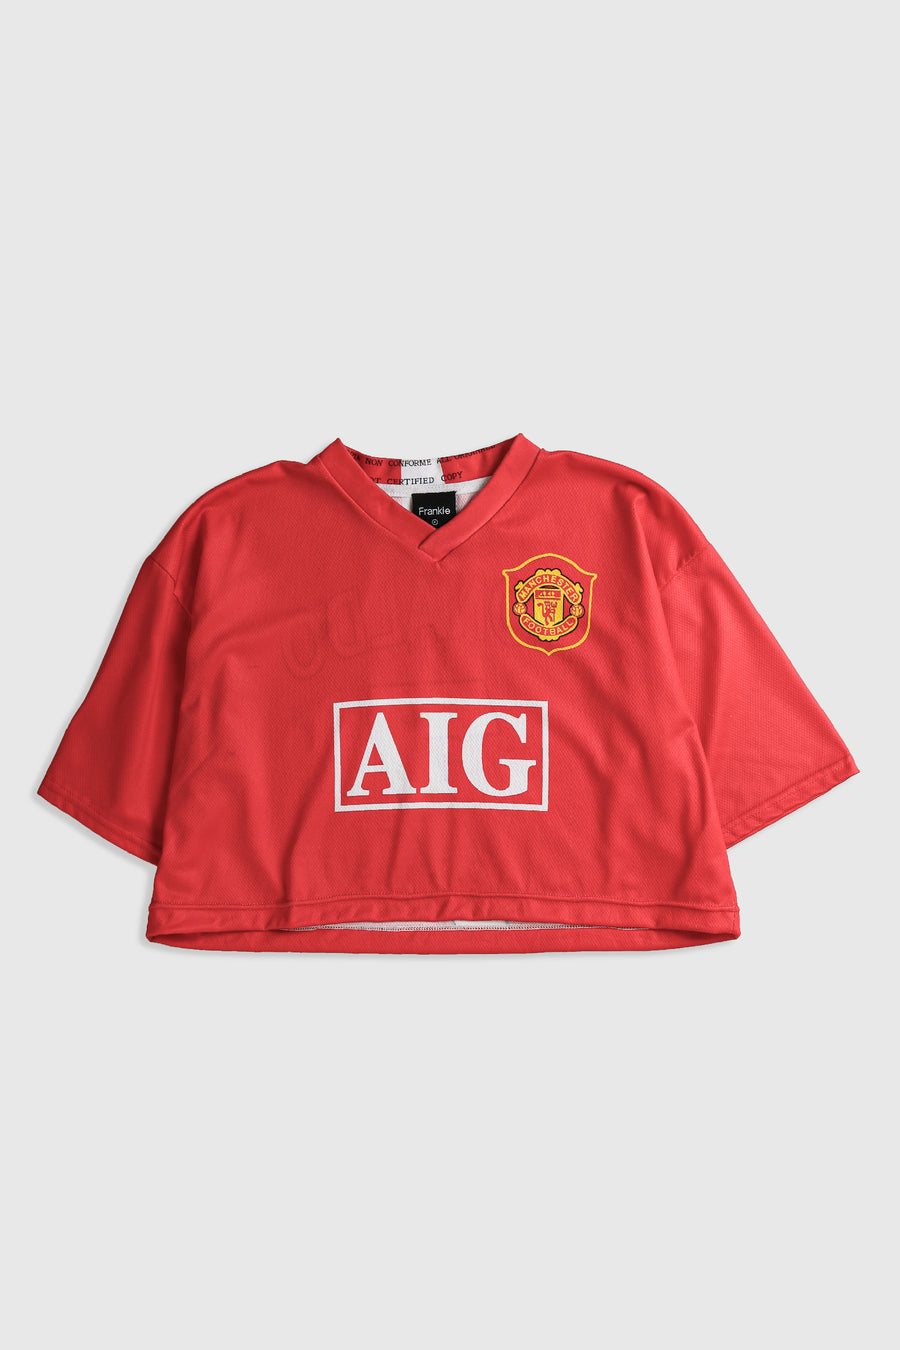 Rework Manchester United Crop Soccer Jersey - XL